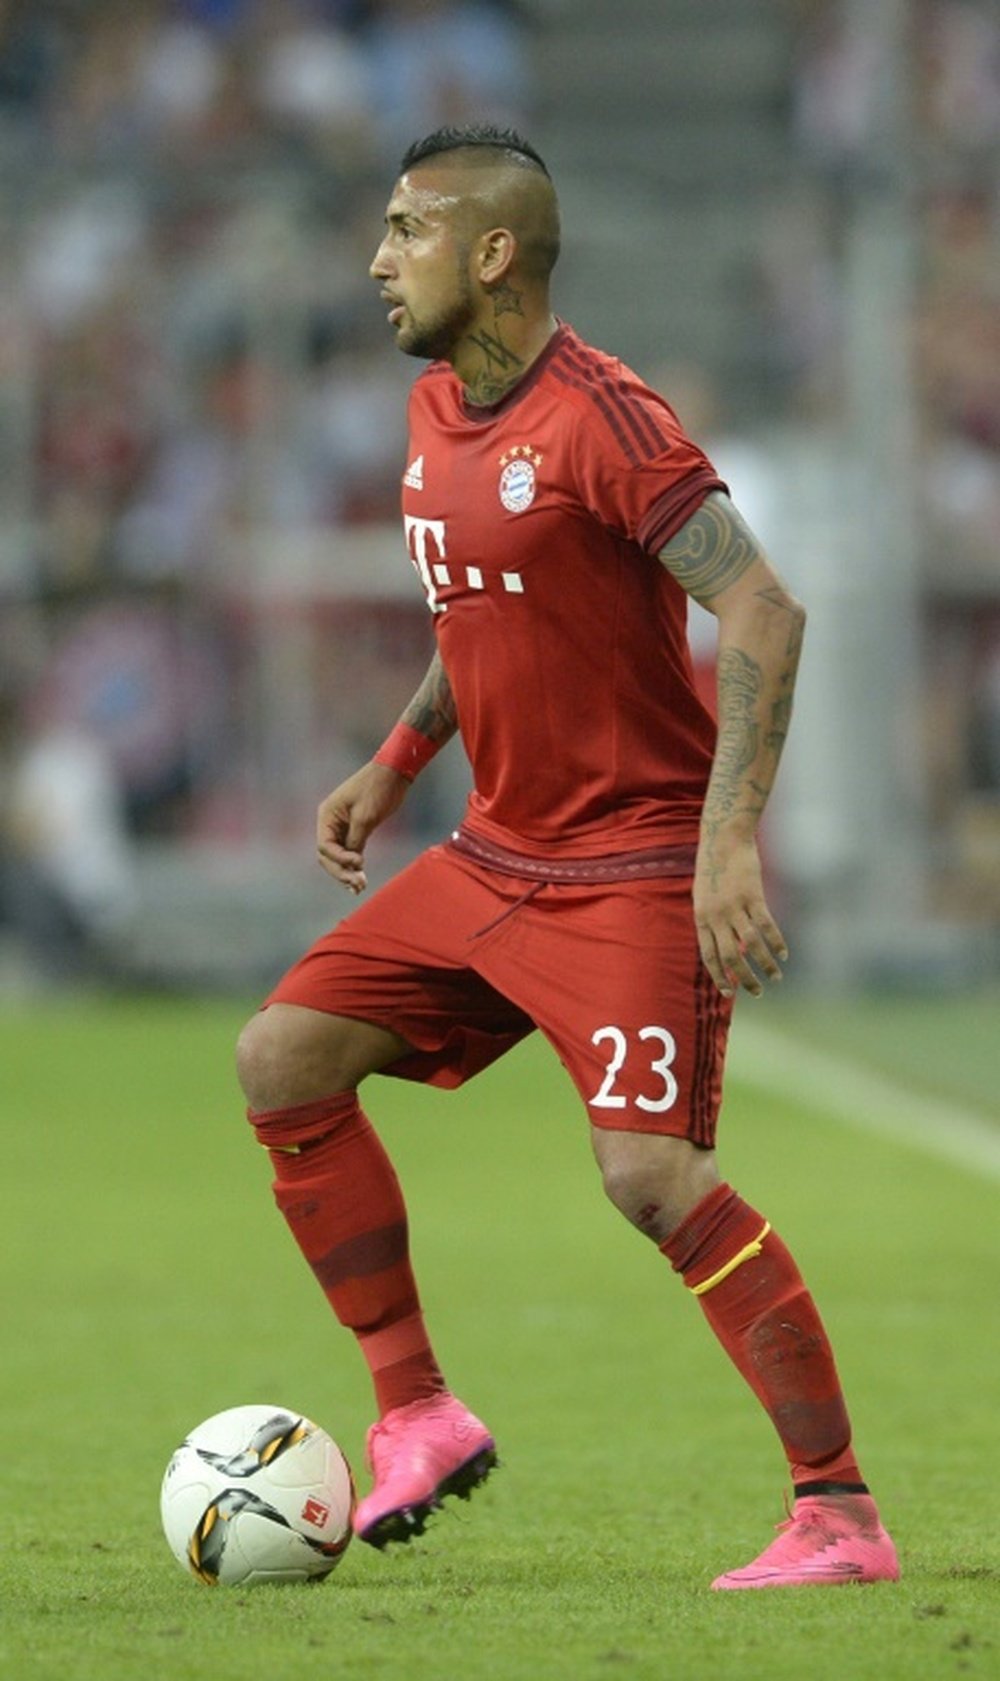 Chilean midfielder Arturo Vidal is a new signing for Bayern Munich